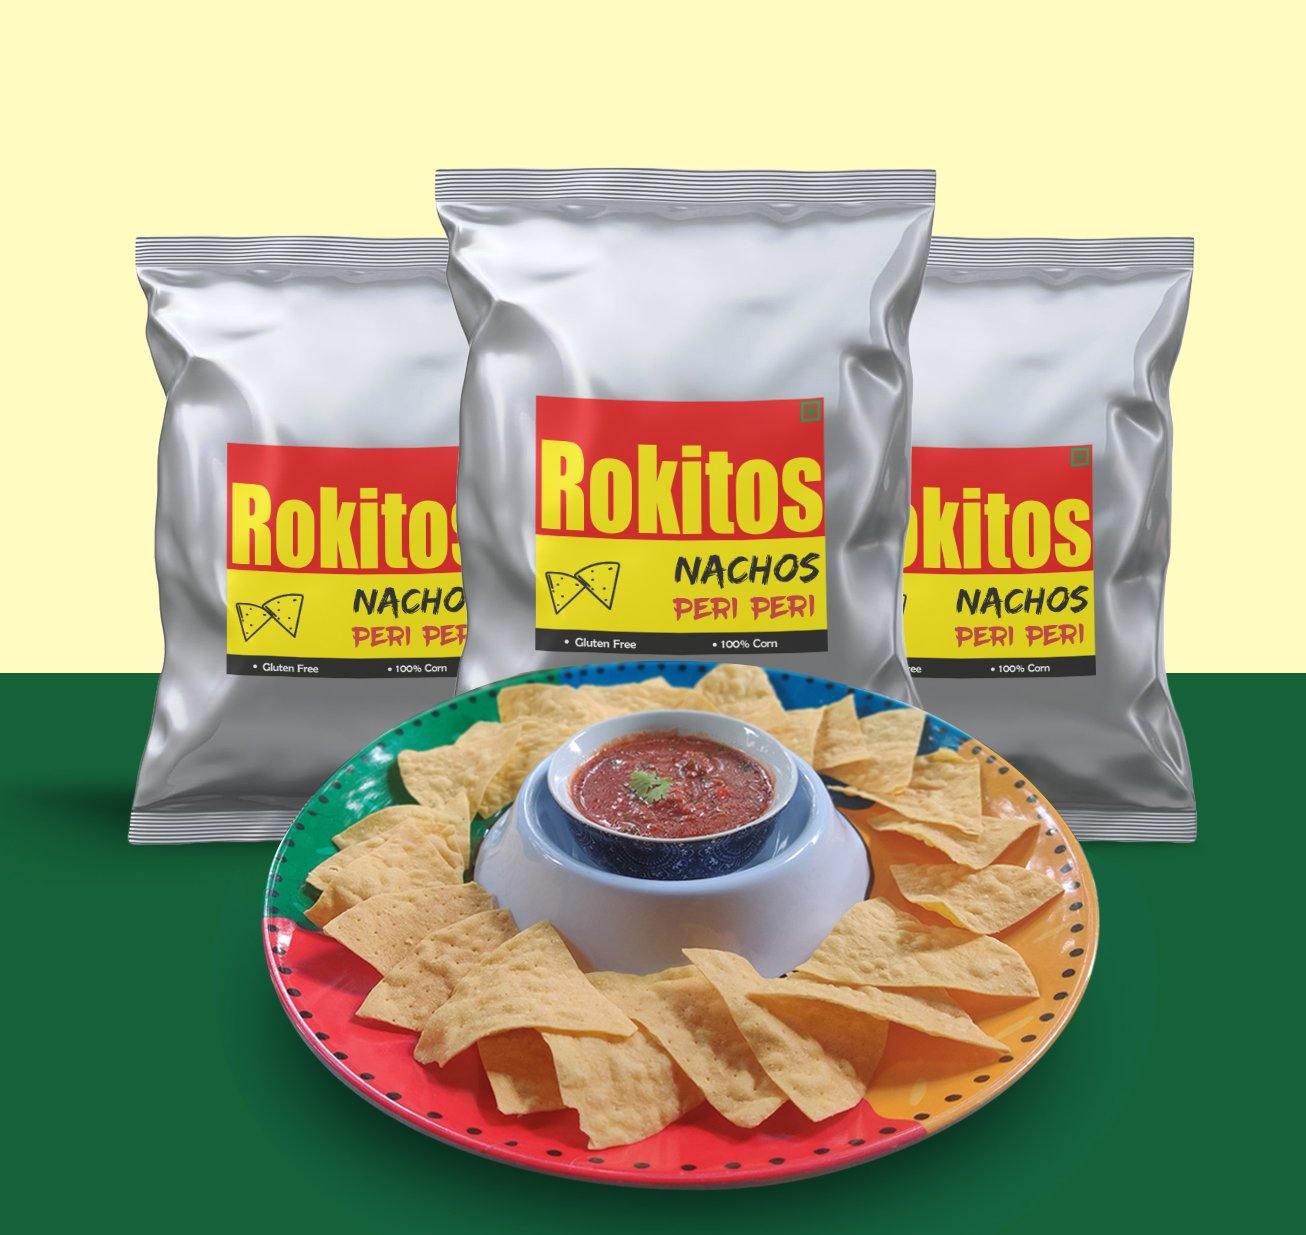 Rokitos- Nachos| Jain| Vegetarian| Crispy Nachos| Nachos Chips| Mexican Dish| Cheddar Cheese| Cheddar Cheese Nachos| Mexican beans| Rokitos Nachos| Peri-Peri| Peri-Peri Nachos| 